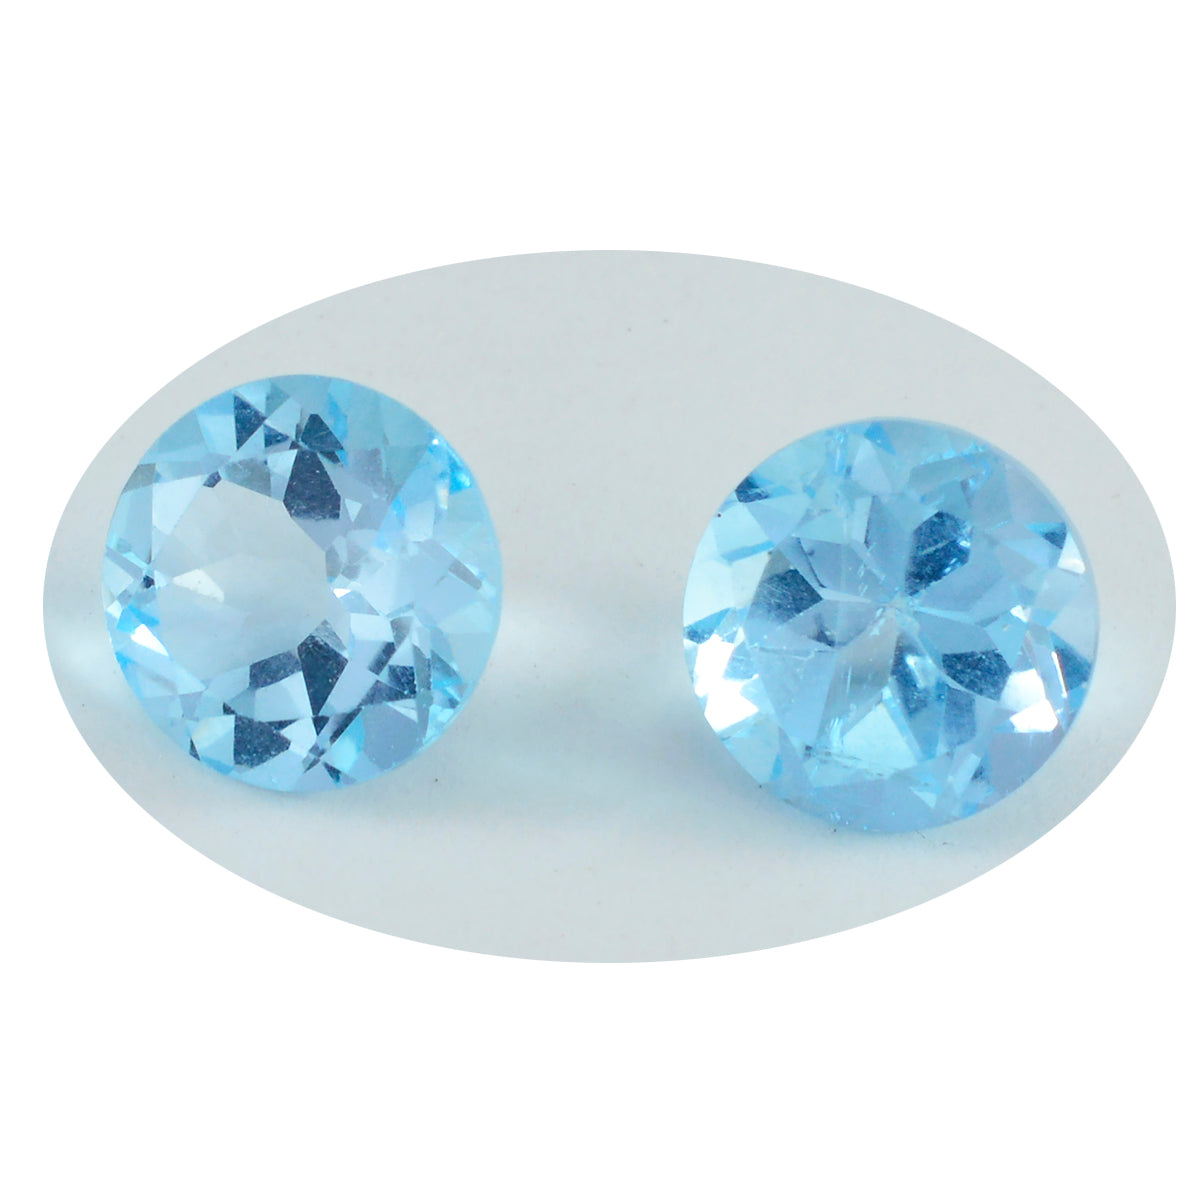 Riyogems 1PC Real Blue Topaz Faceted 8x8 mm Round Shape amazing Quality Gems